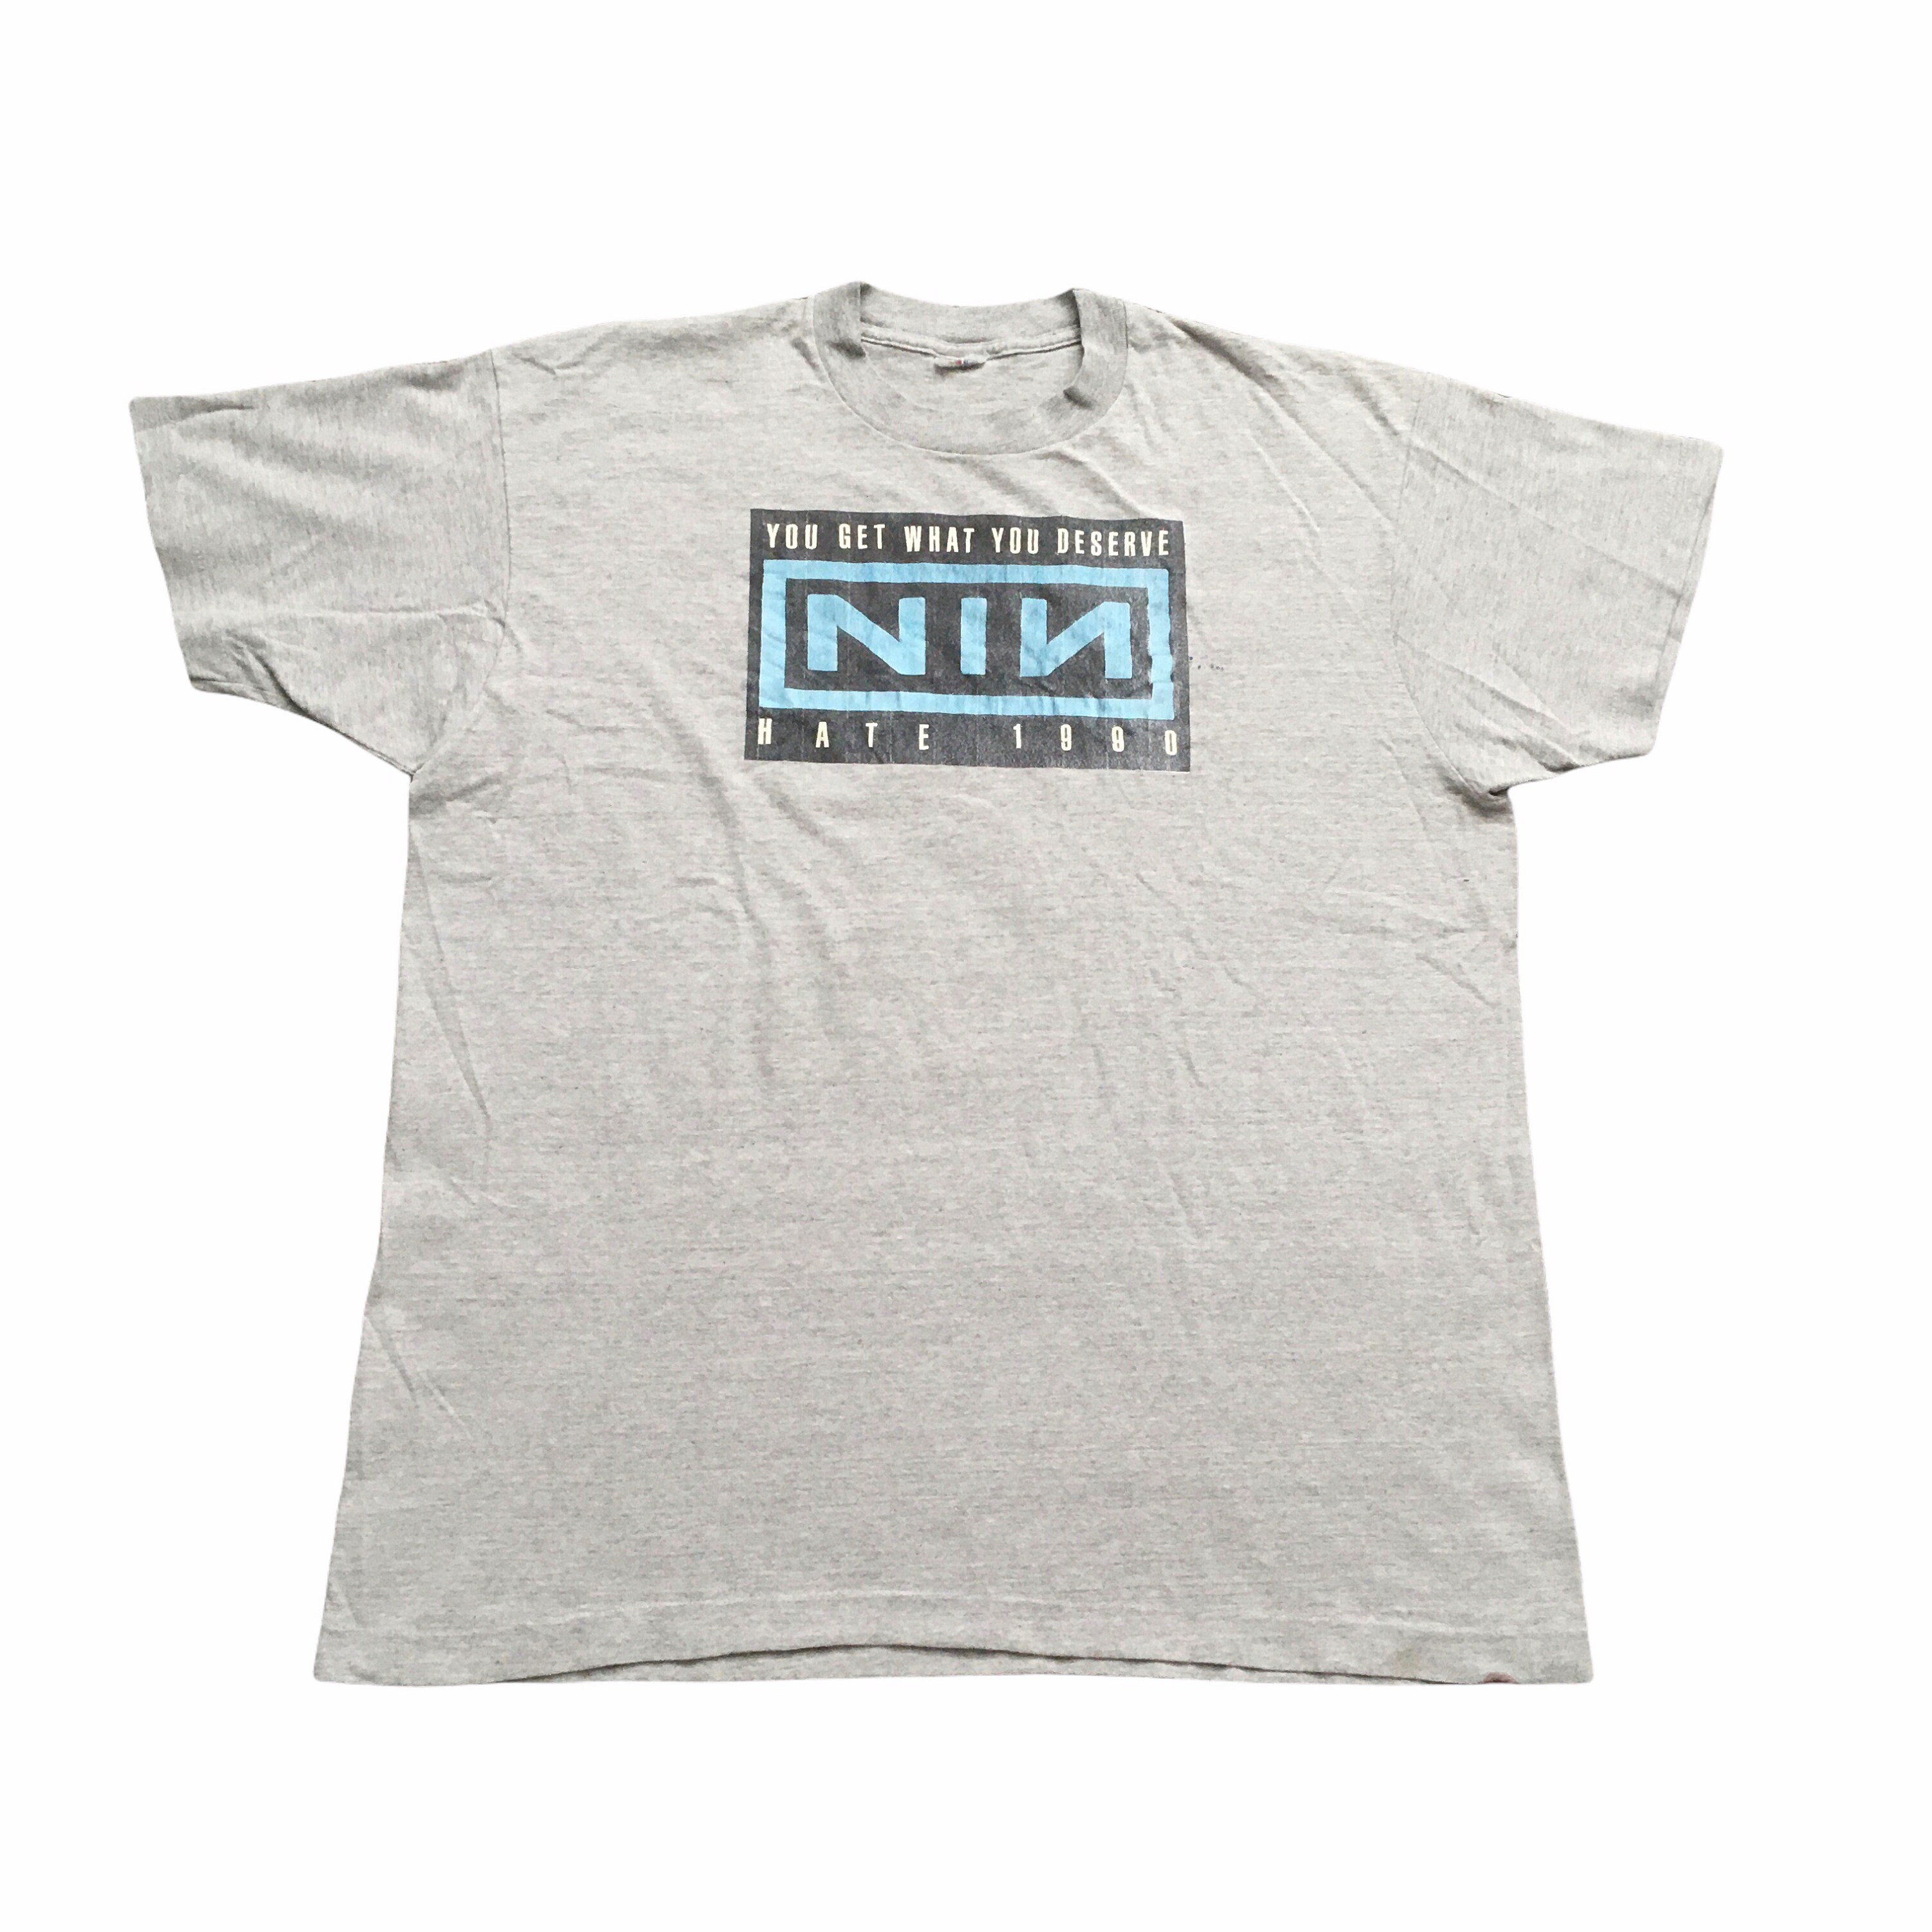 Vintage Rare Nine Inch Nails “Hate-1990” T shirt Size S-2XL Reprint